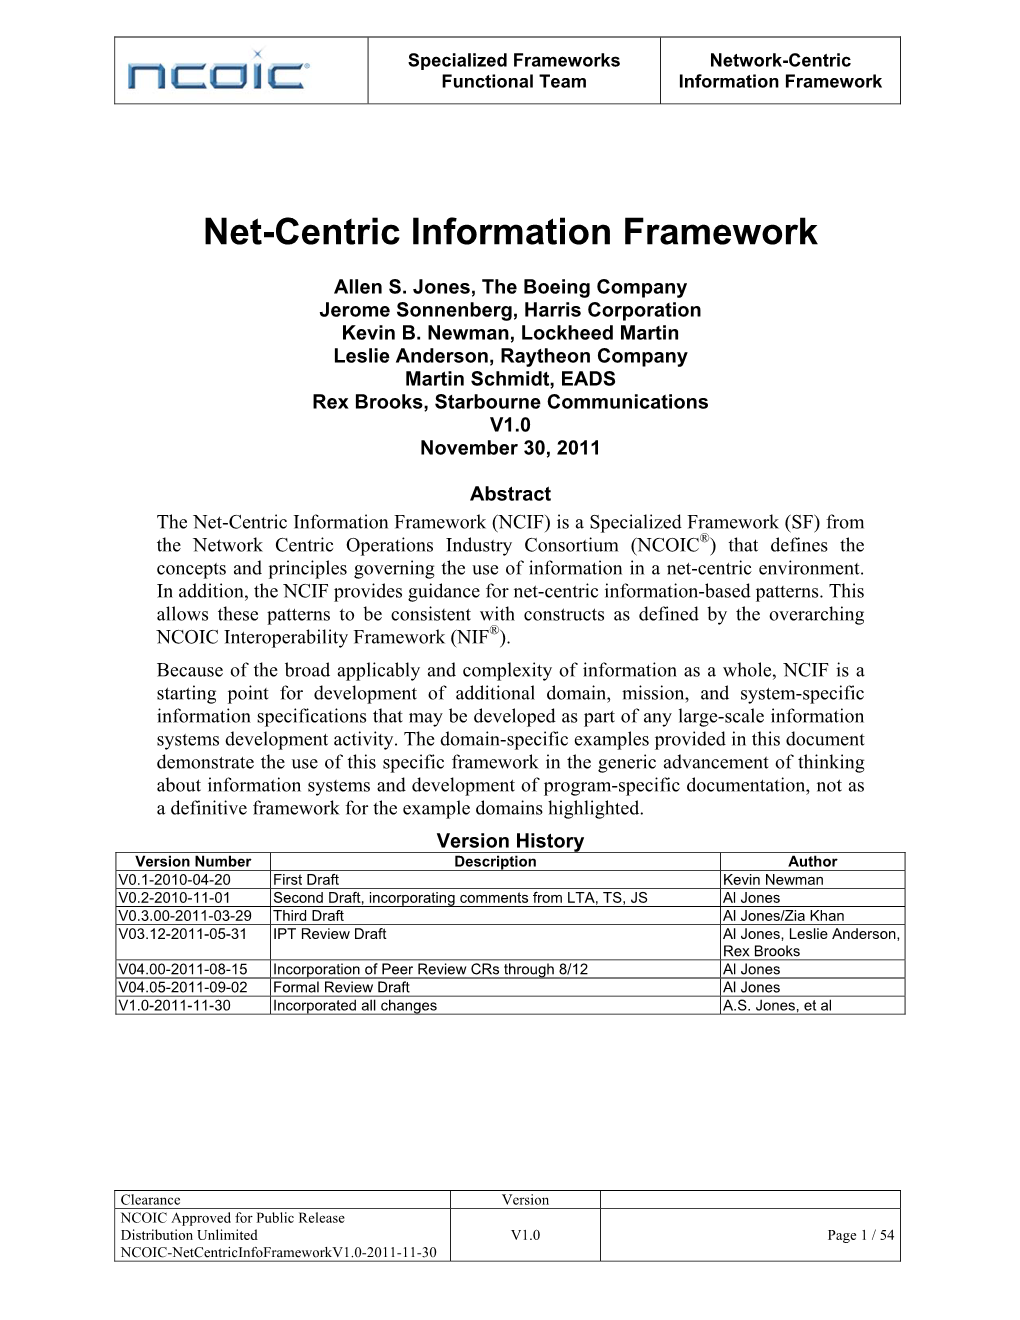 Net-Centric Information Framework